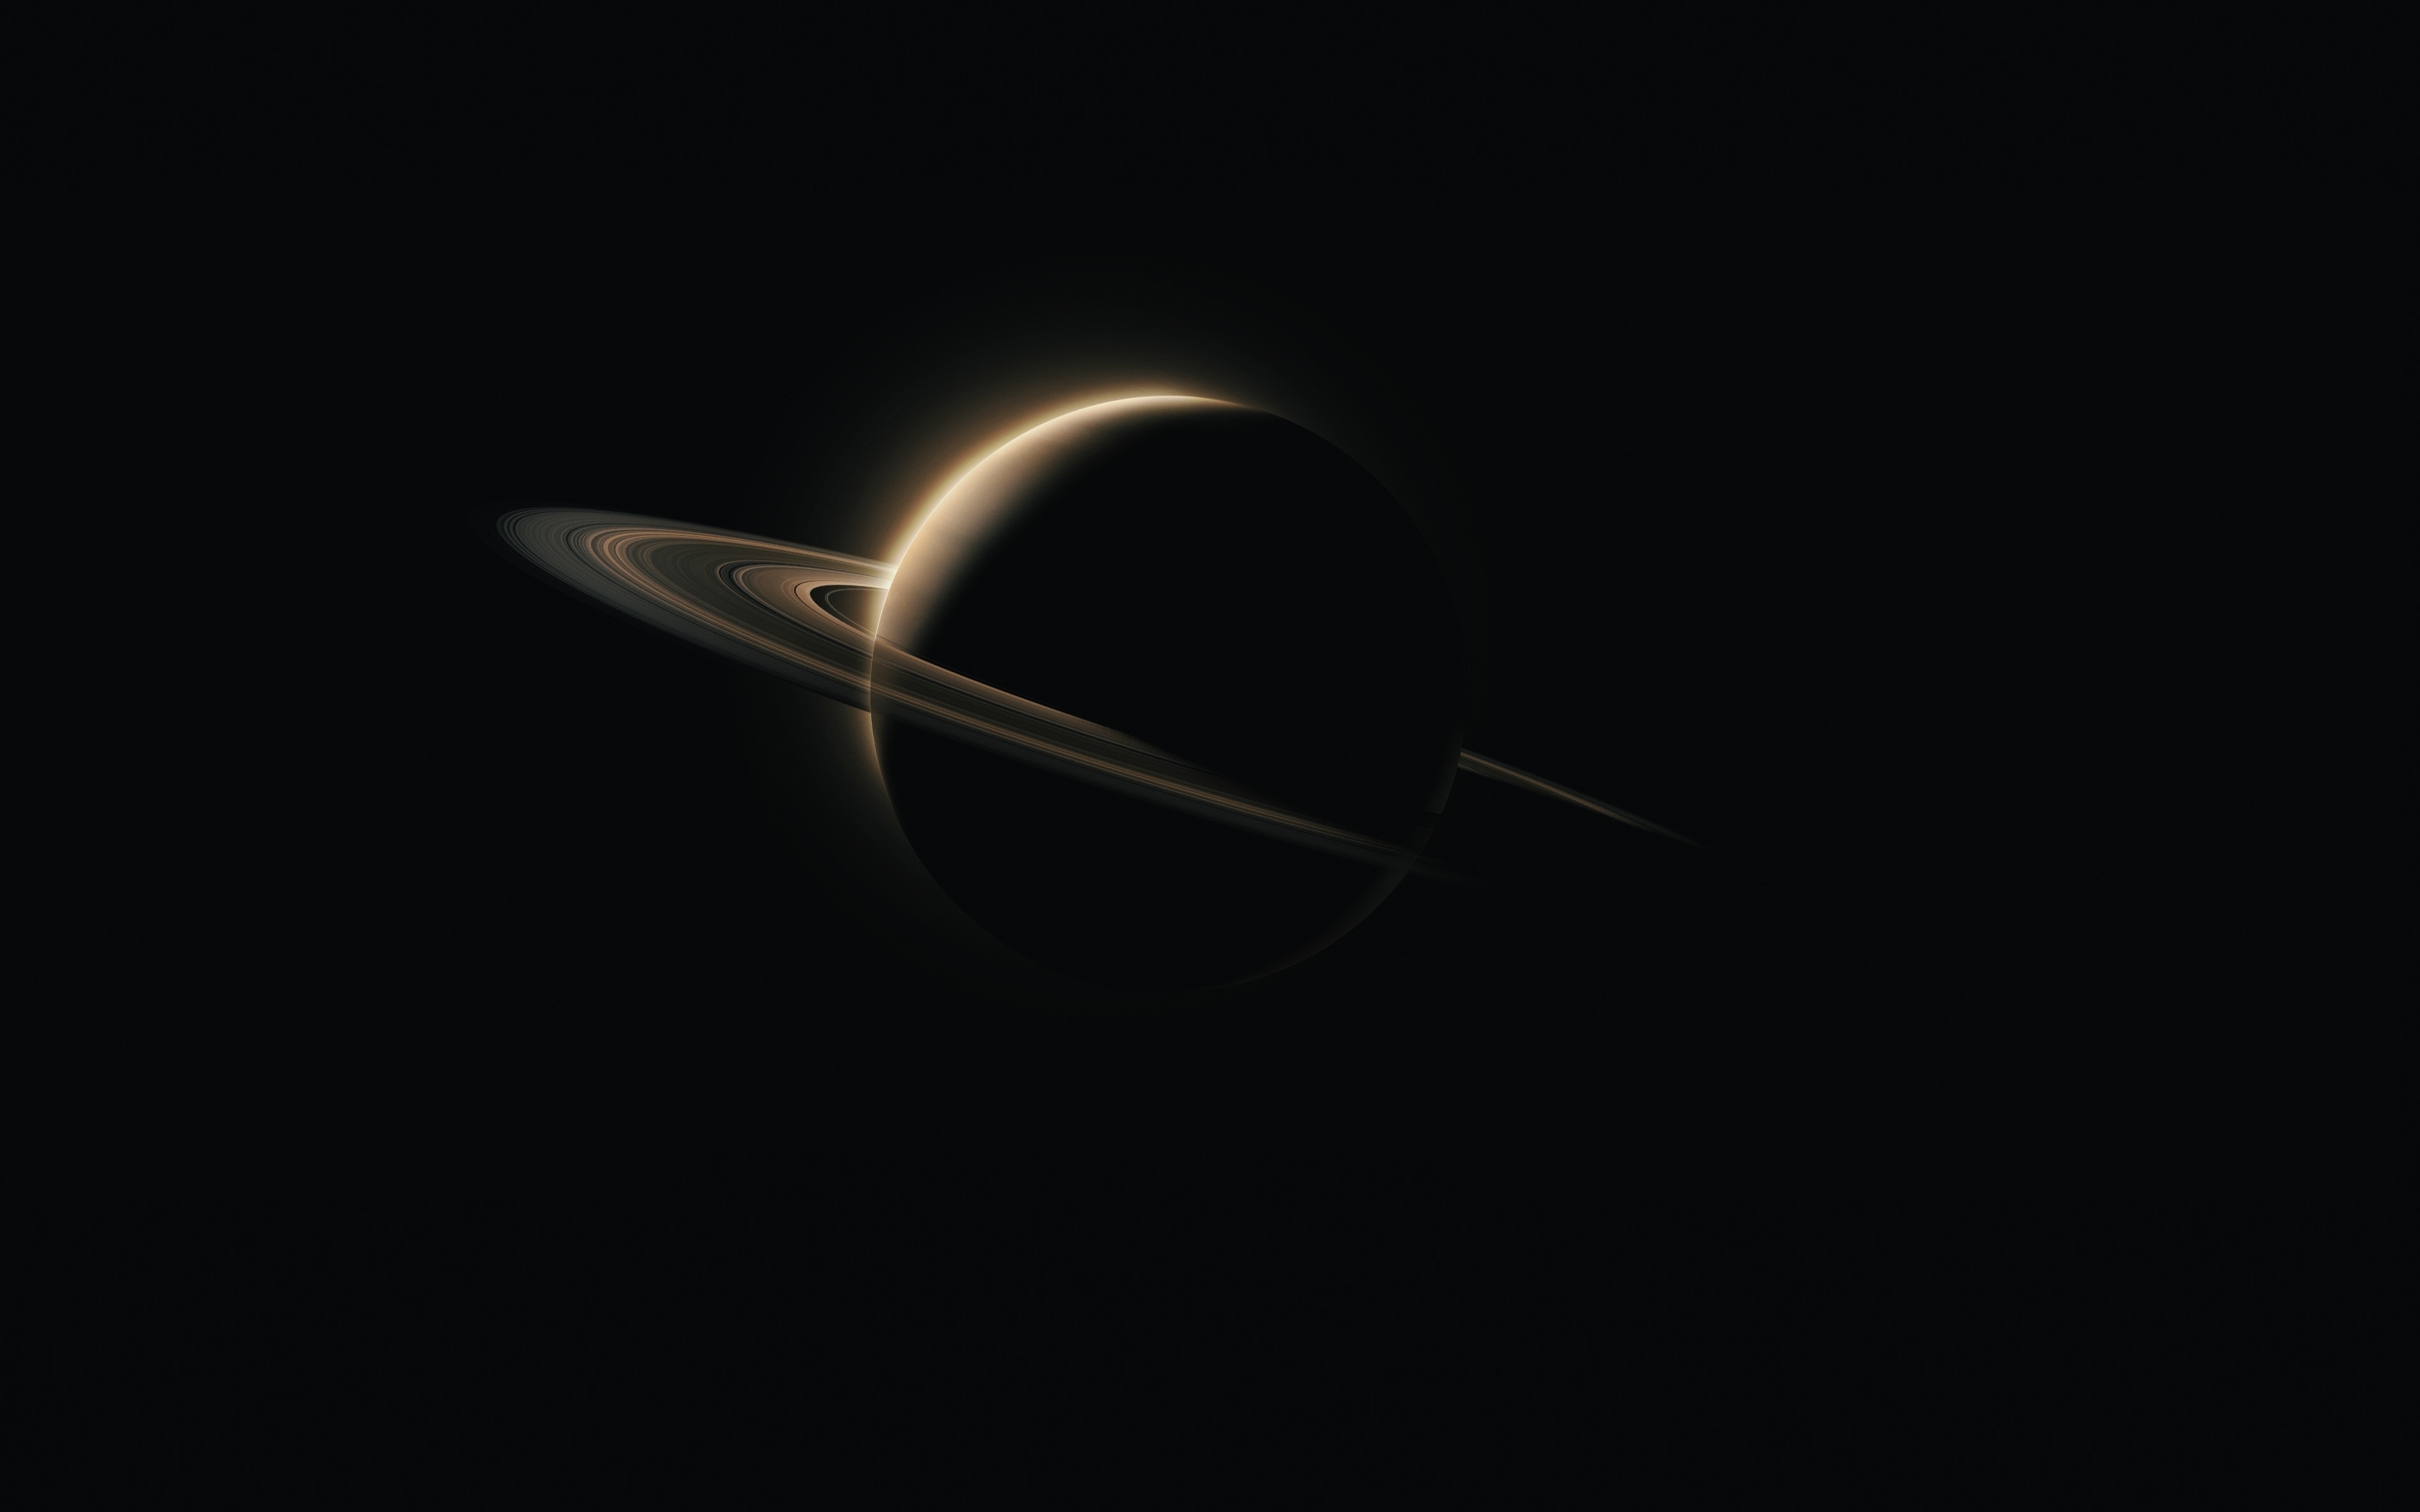 30k Saturn Pictures  Download Free Images on Unsplash